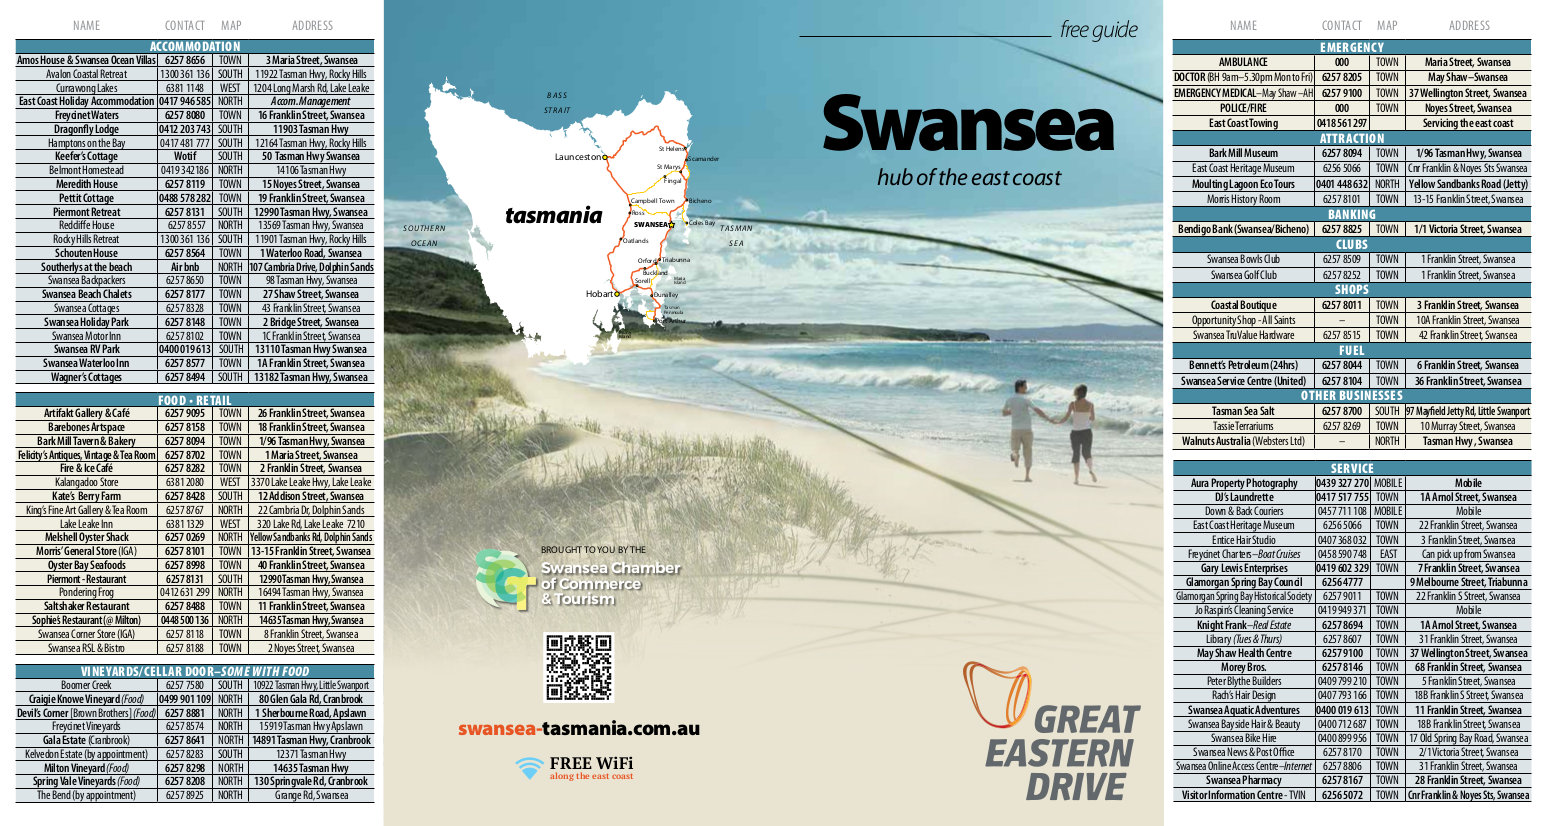 Swansea point of interest listings